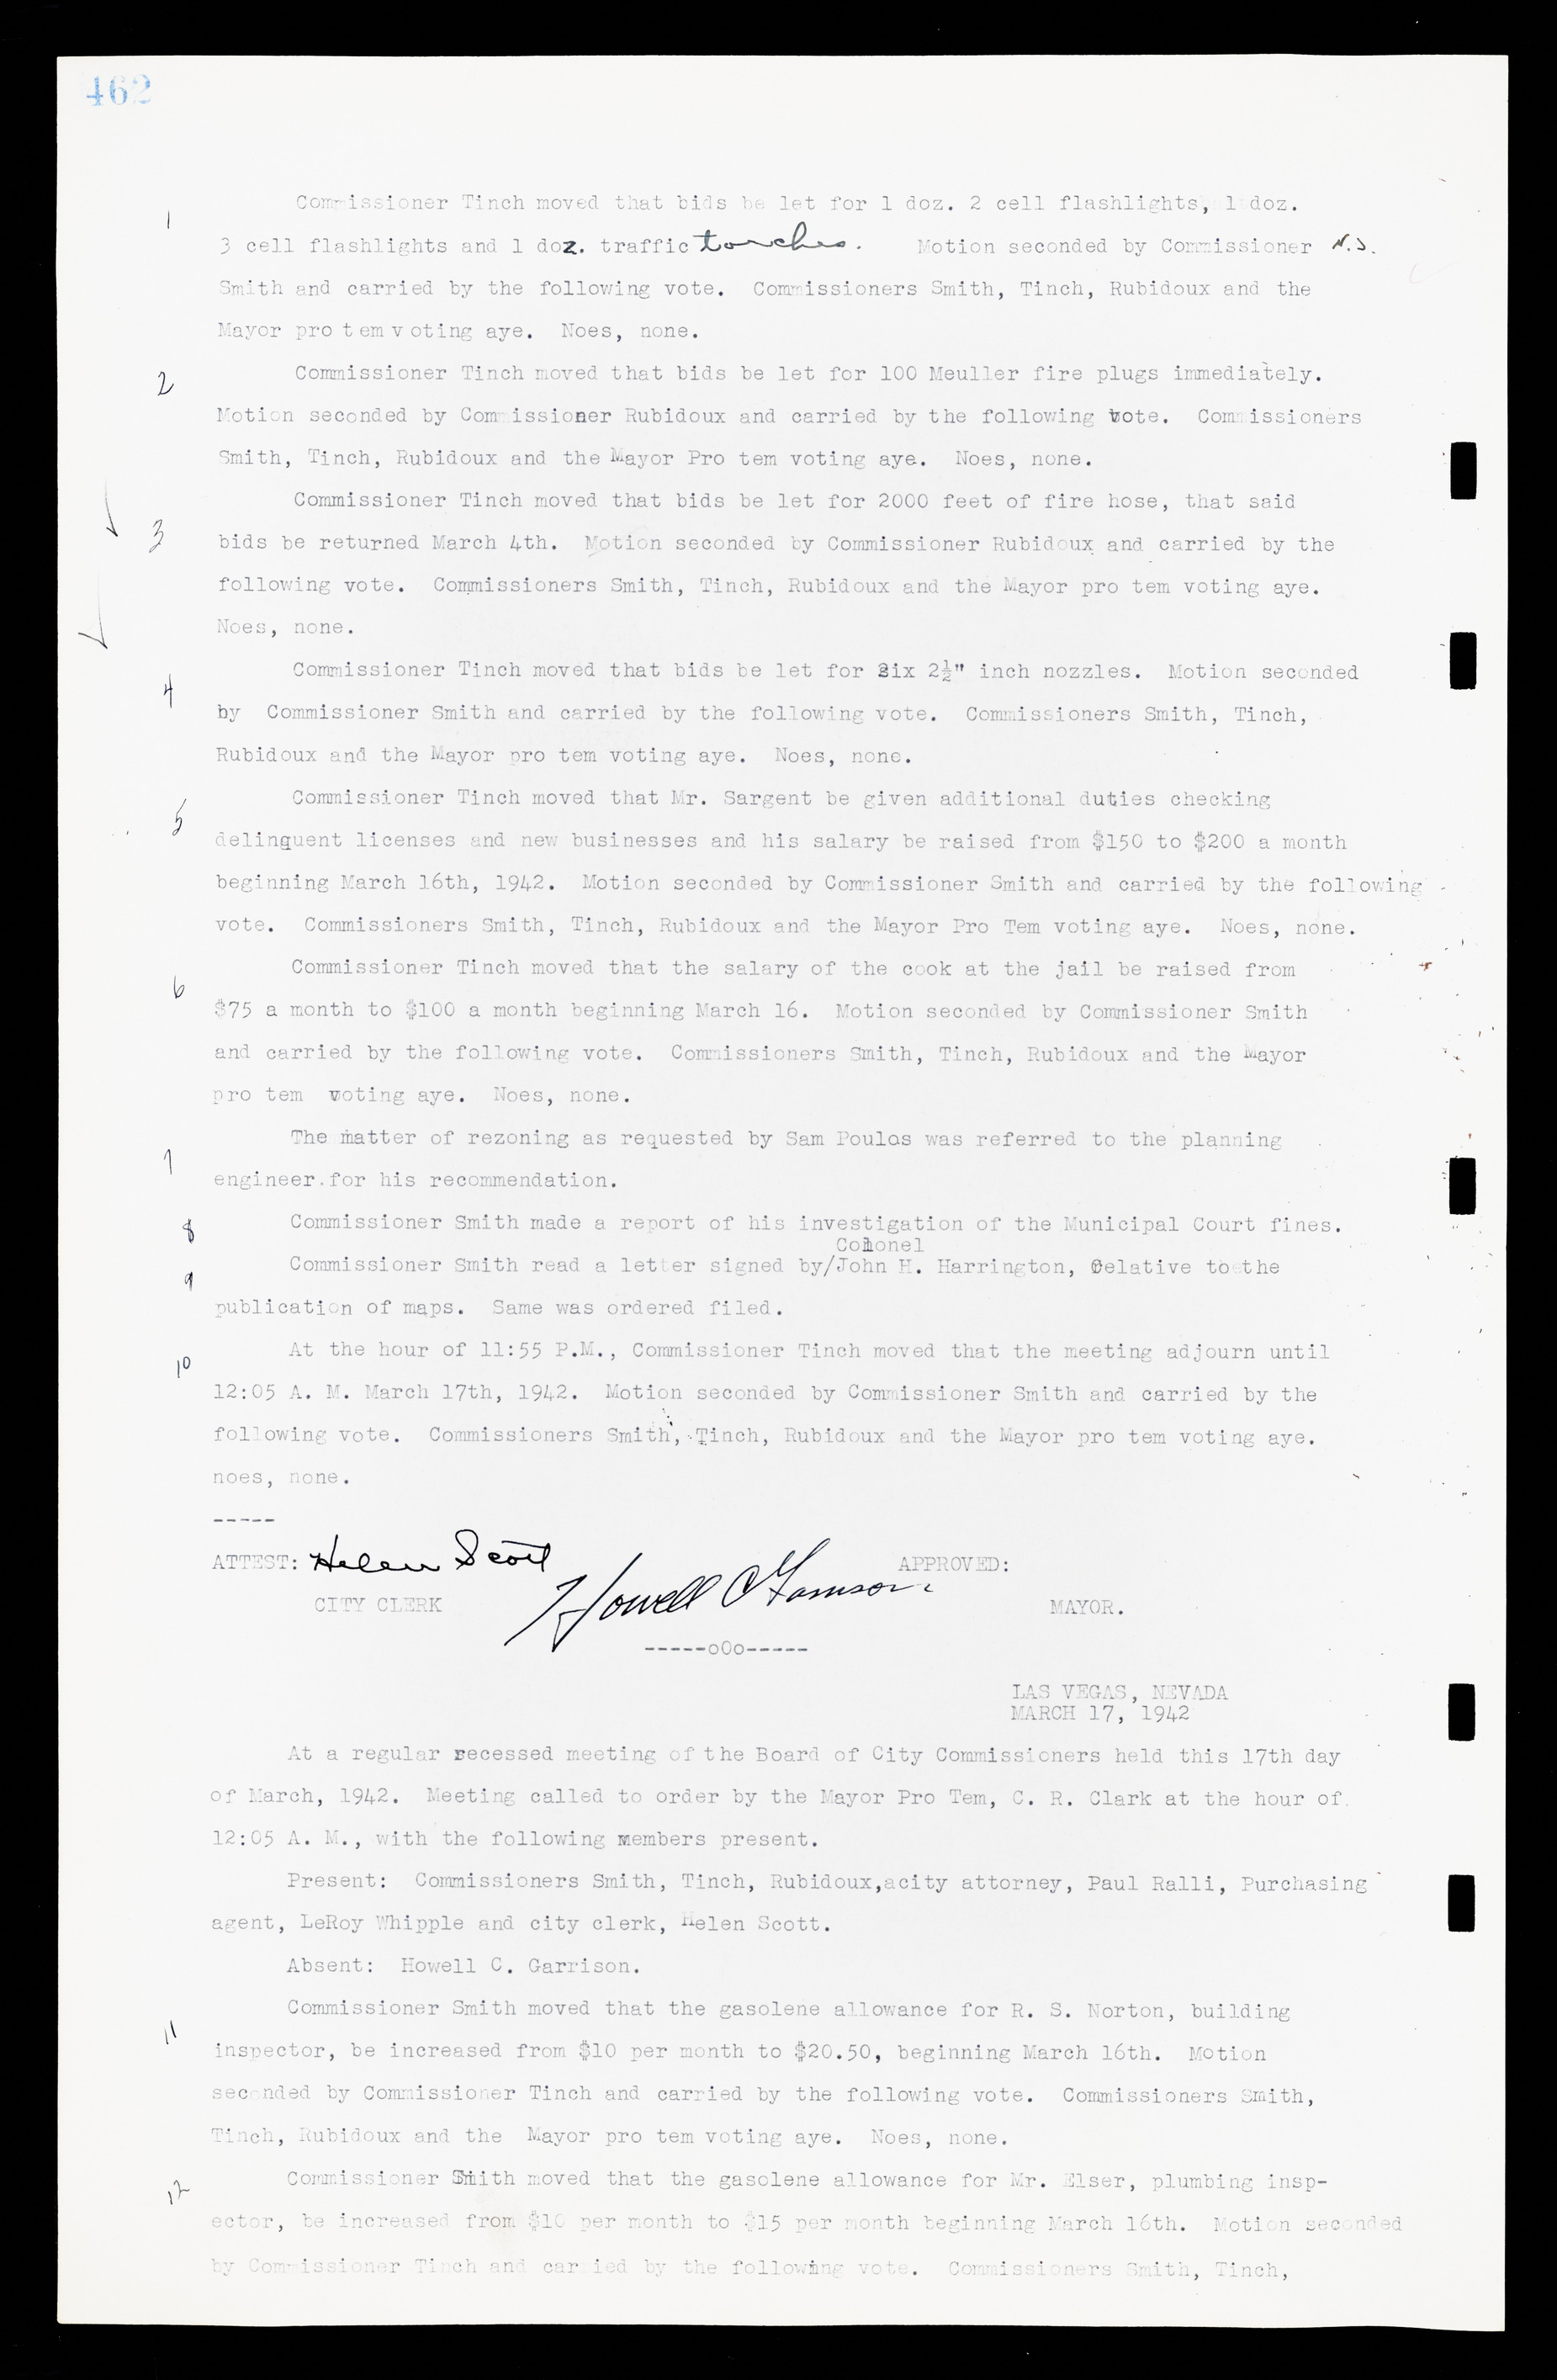 Las Vegas City Commission Minutes, February 17, 1937 to August 4, 1942, lvc000004-490